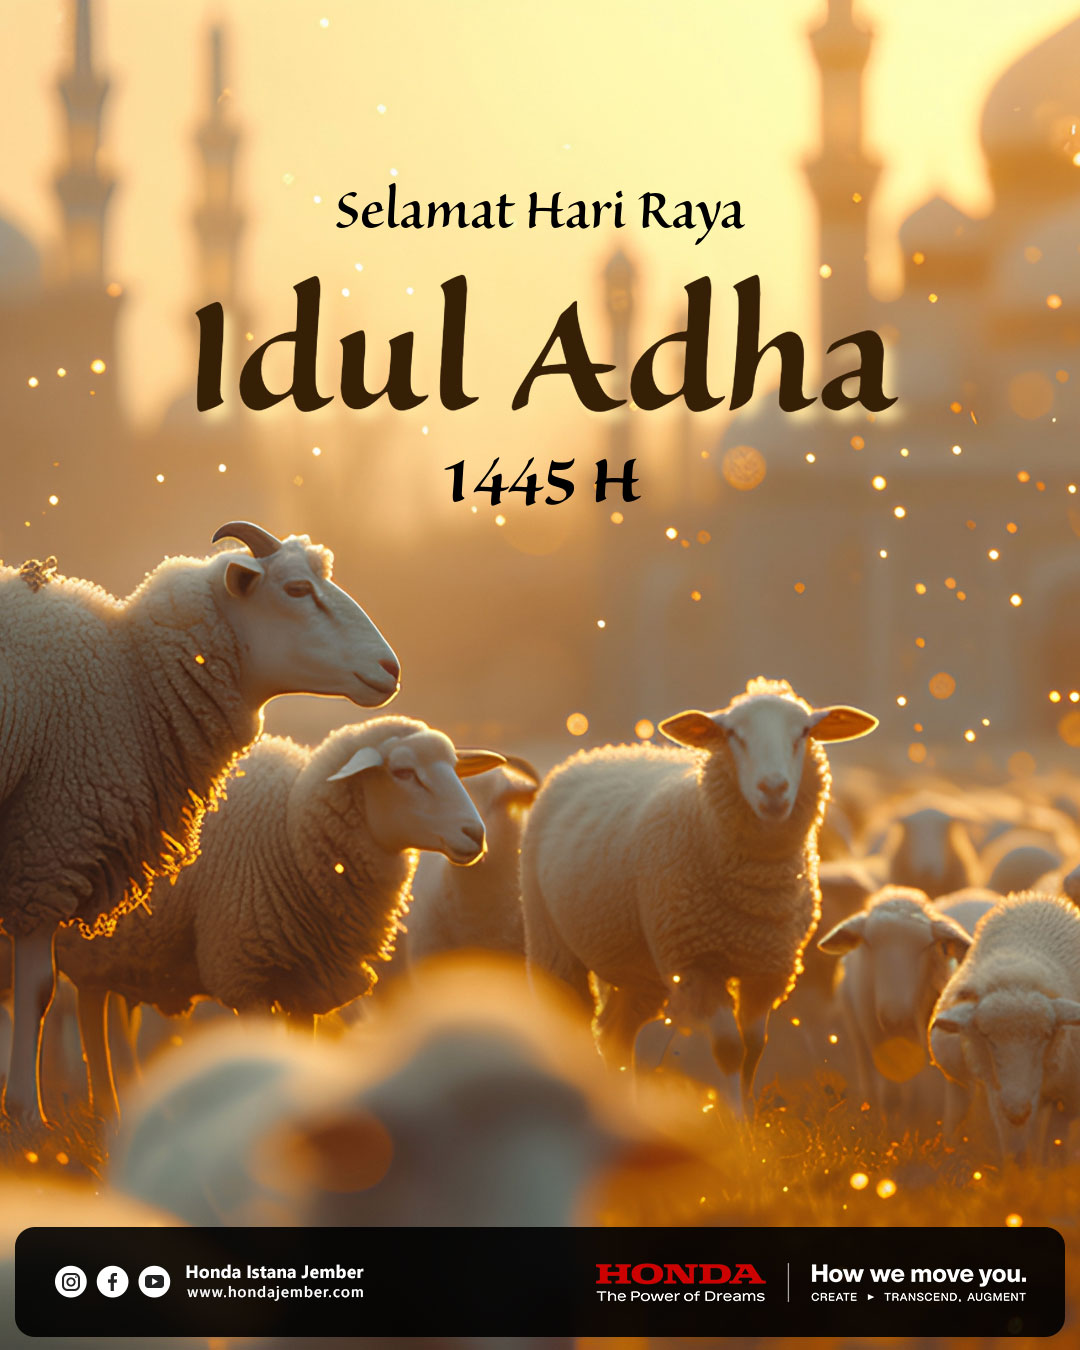 Hari Raya Idul Adha 1445 H